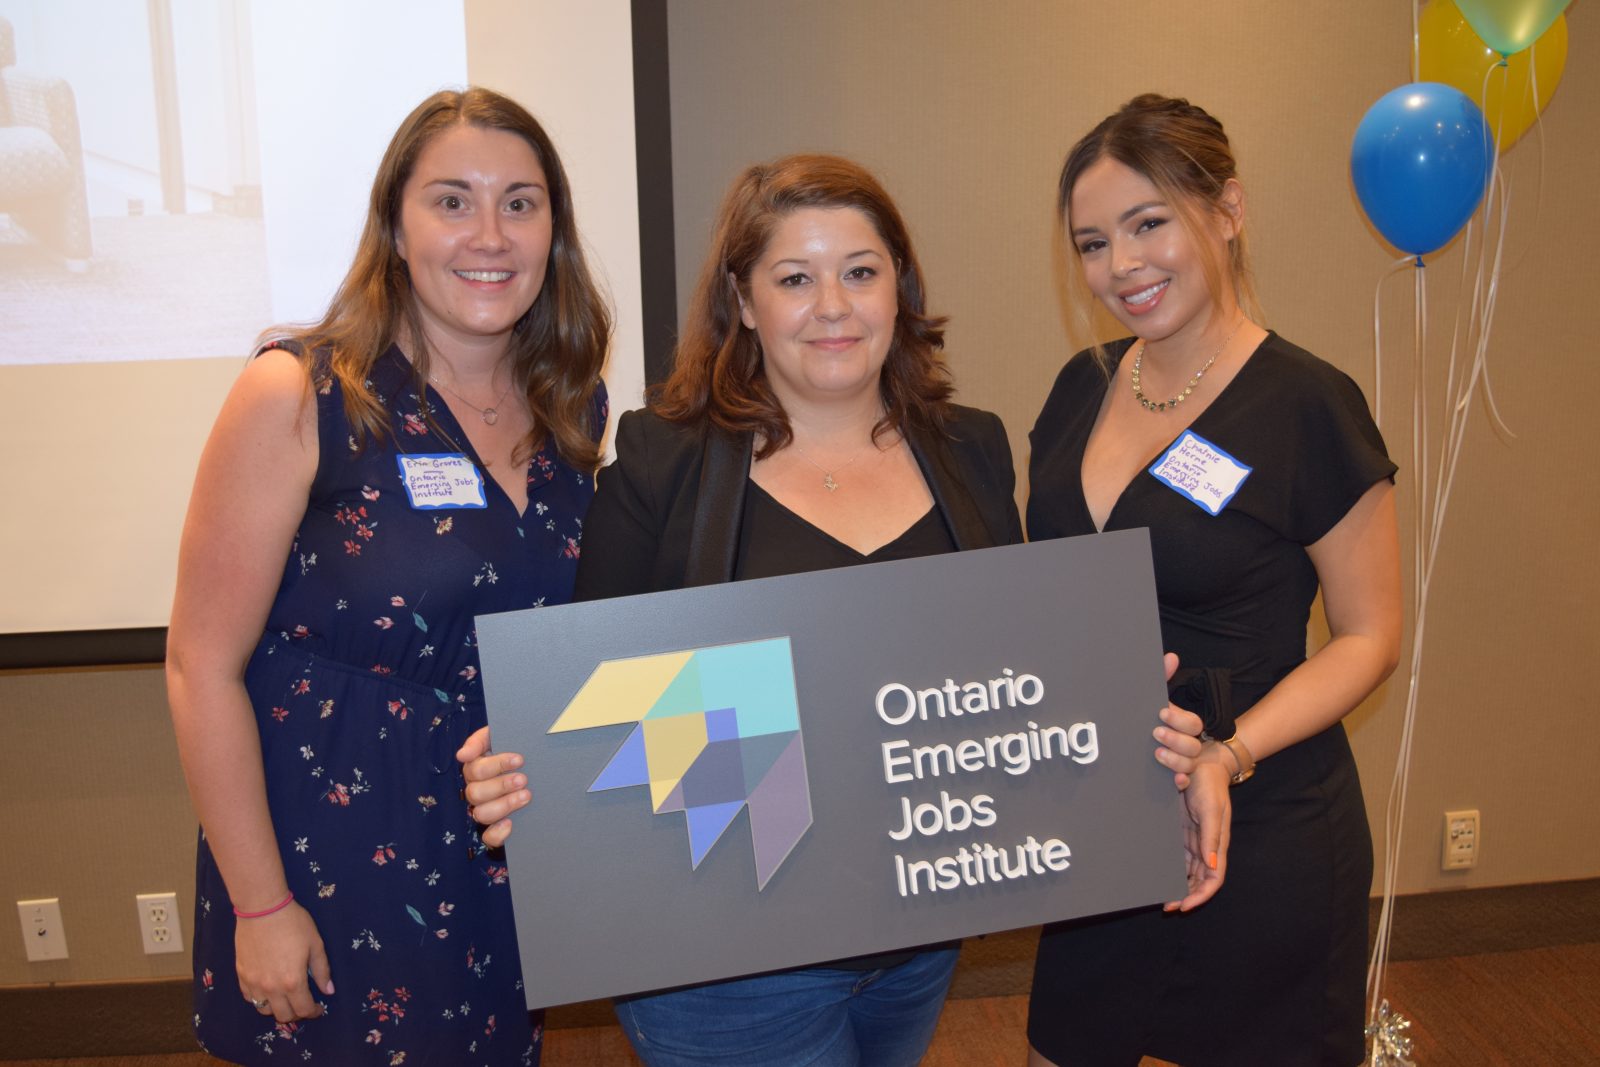 The Ontario Emerging Jobs Institute opens Monday